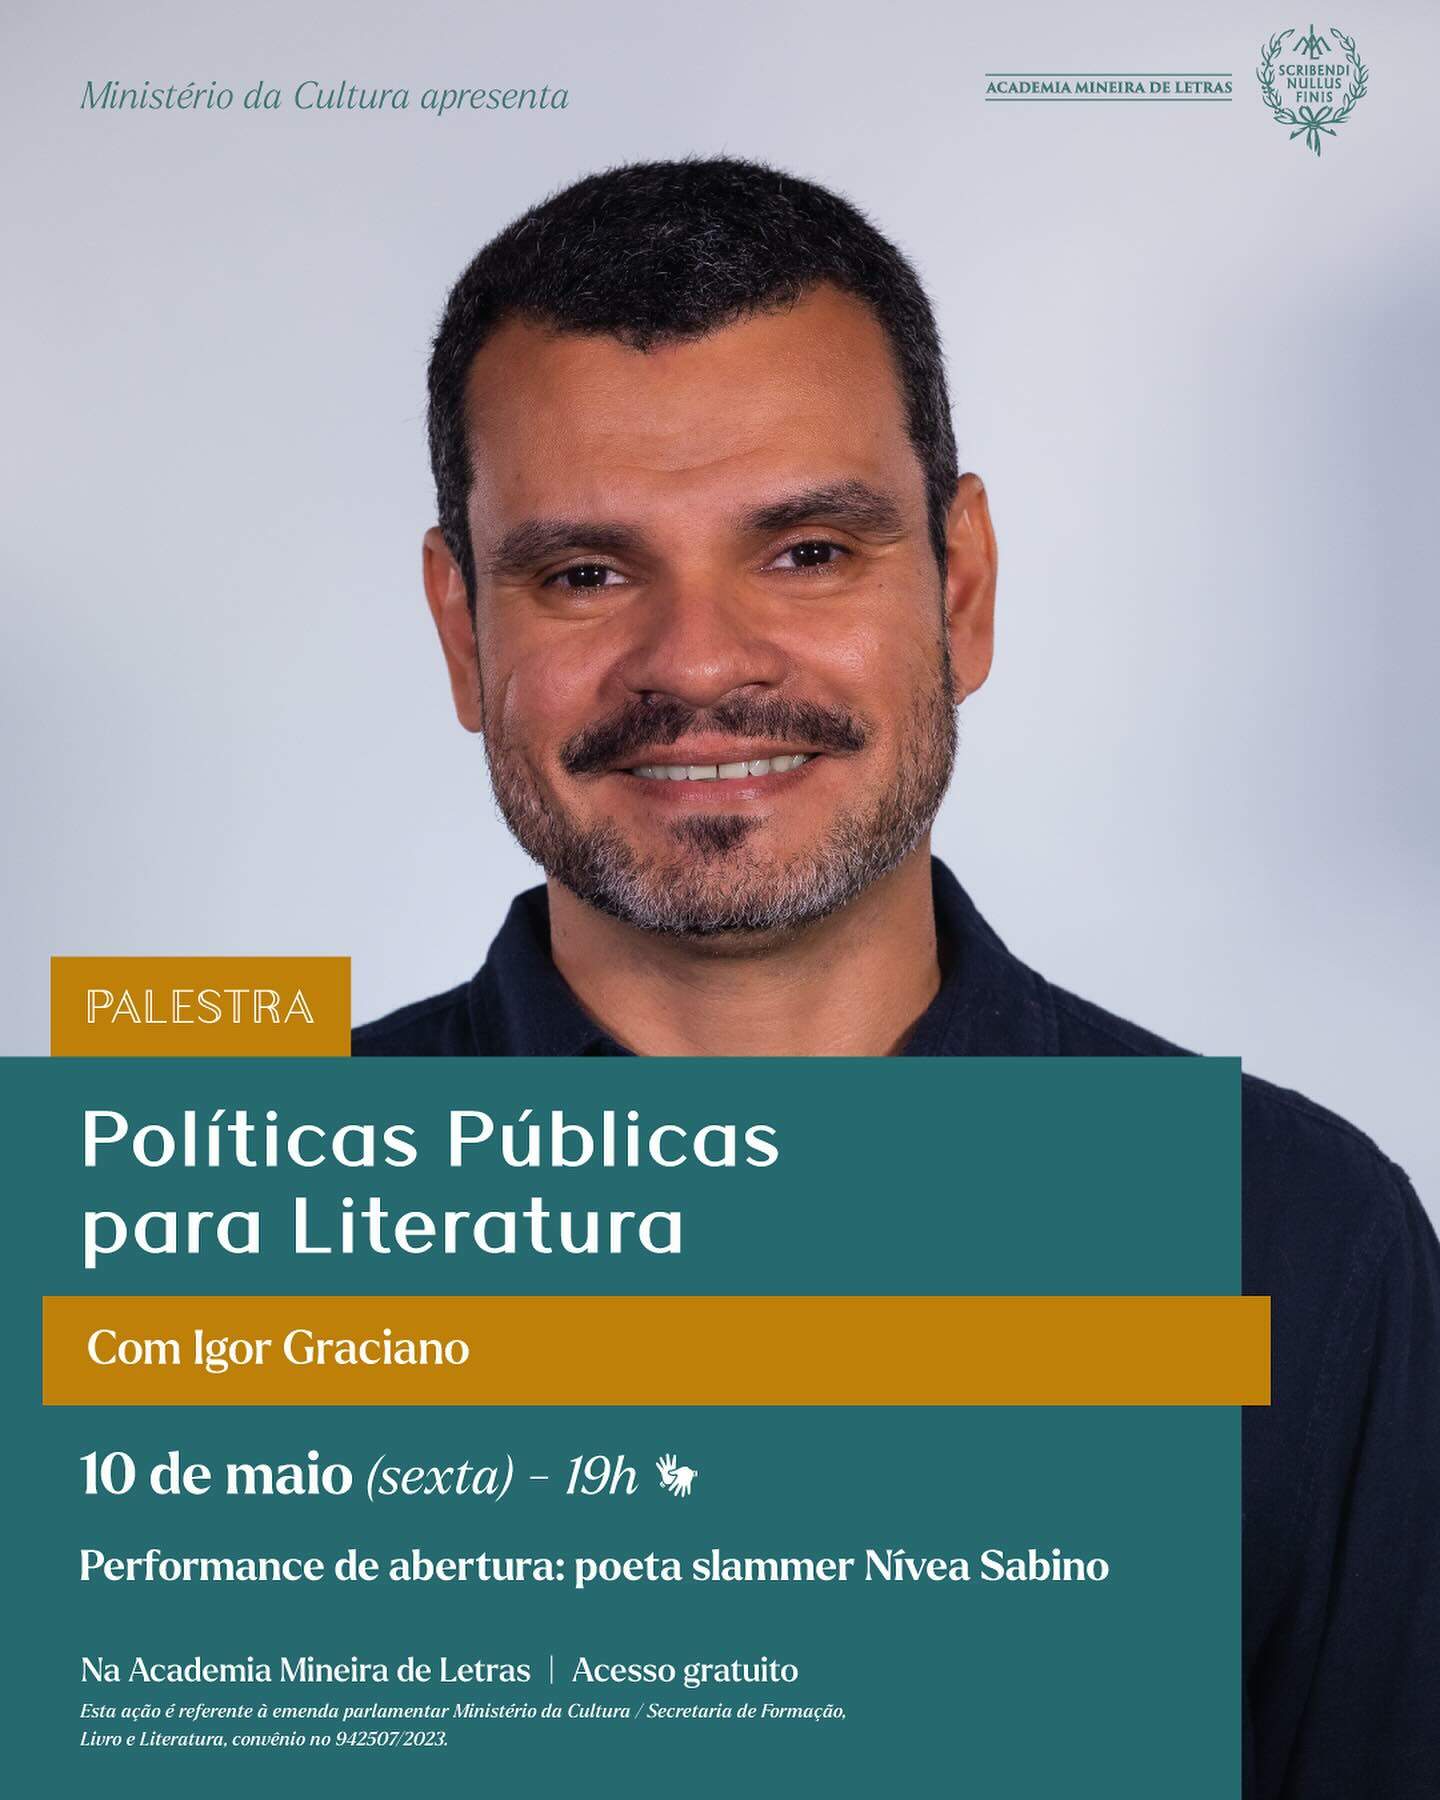 Palestra: “Políticas públicas para a Literatura”